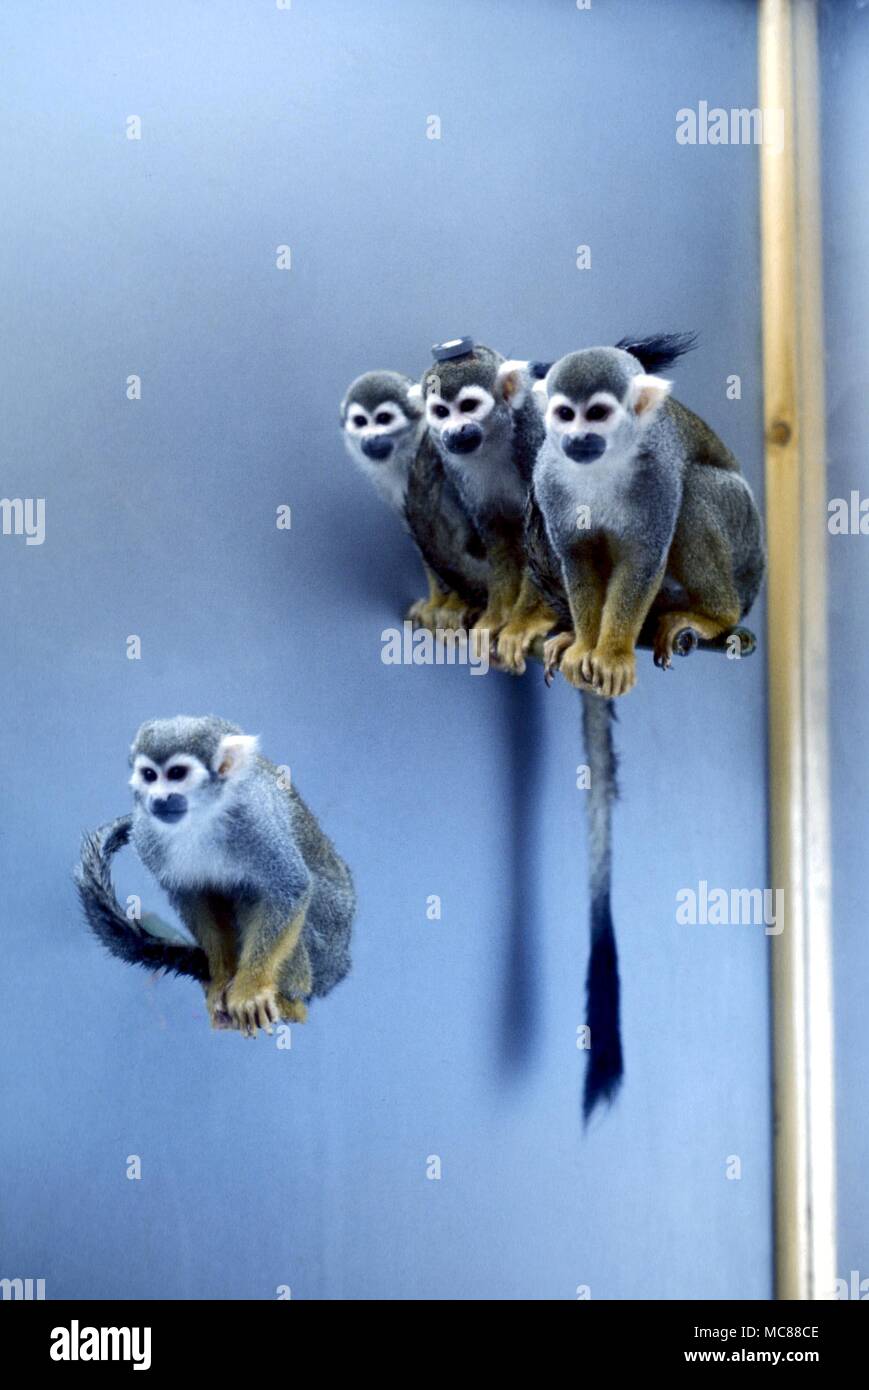 SCIENTIFIC CURIOSITIES Group of monkeys - squirrel monkeys - used in scientific experiments Stock Photo